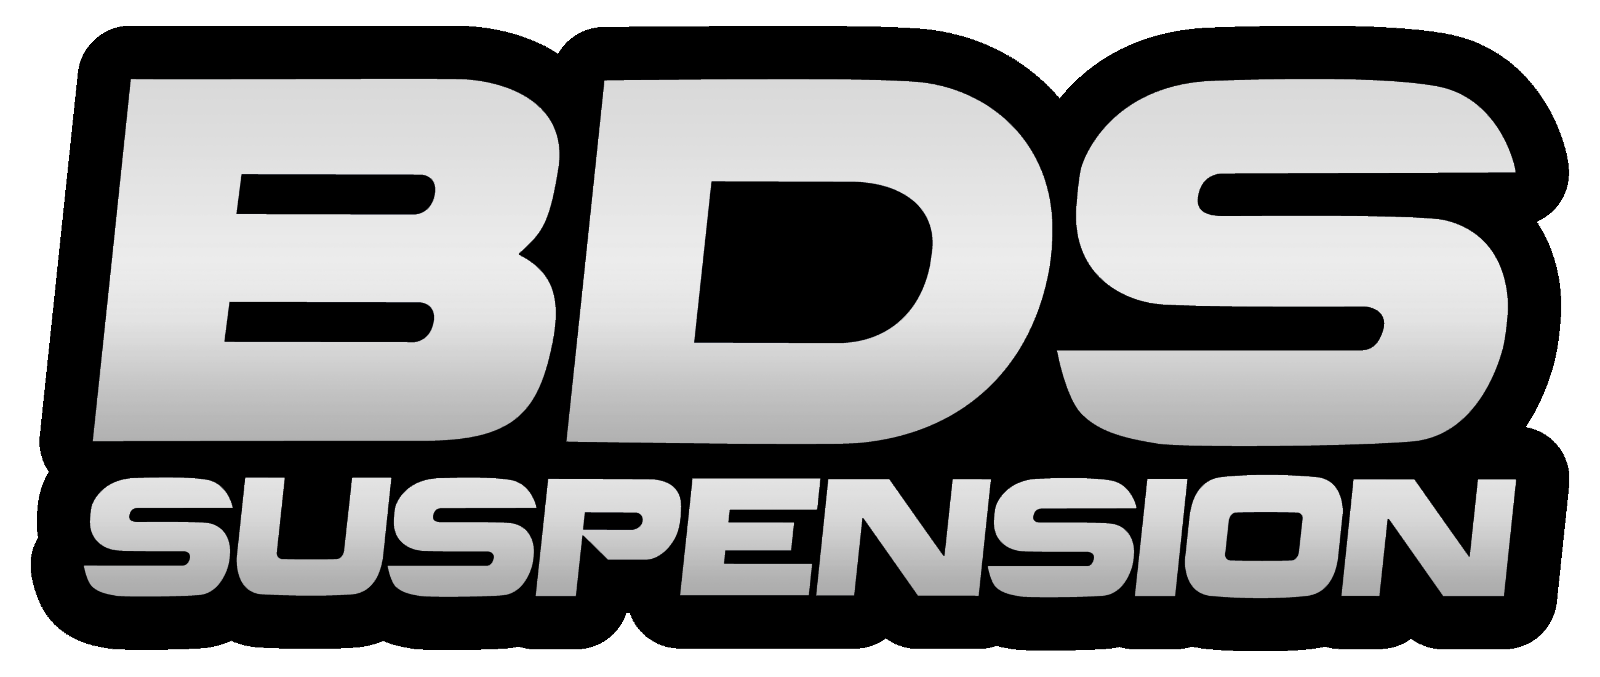 BDS BDS180FS 6 Inch Lift Kit Chevy Silverado or GMC Sierra 1500 (99-06) 4WD